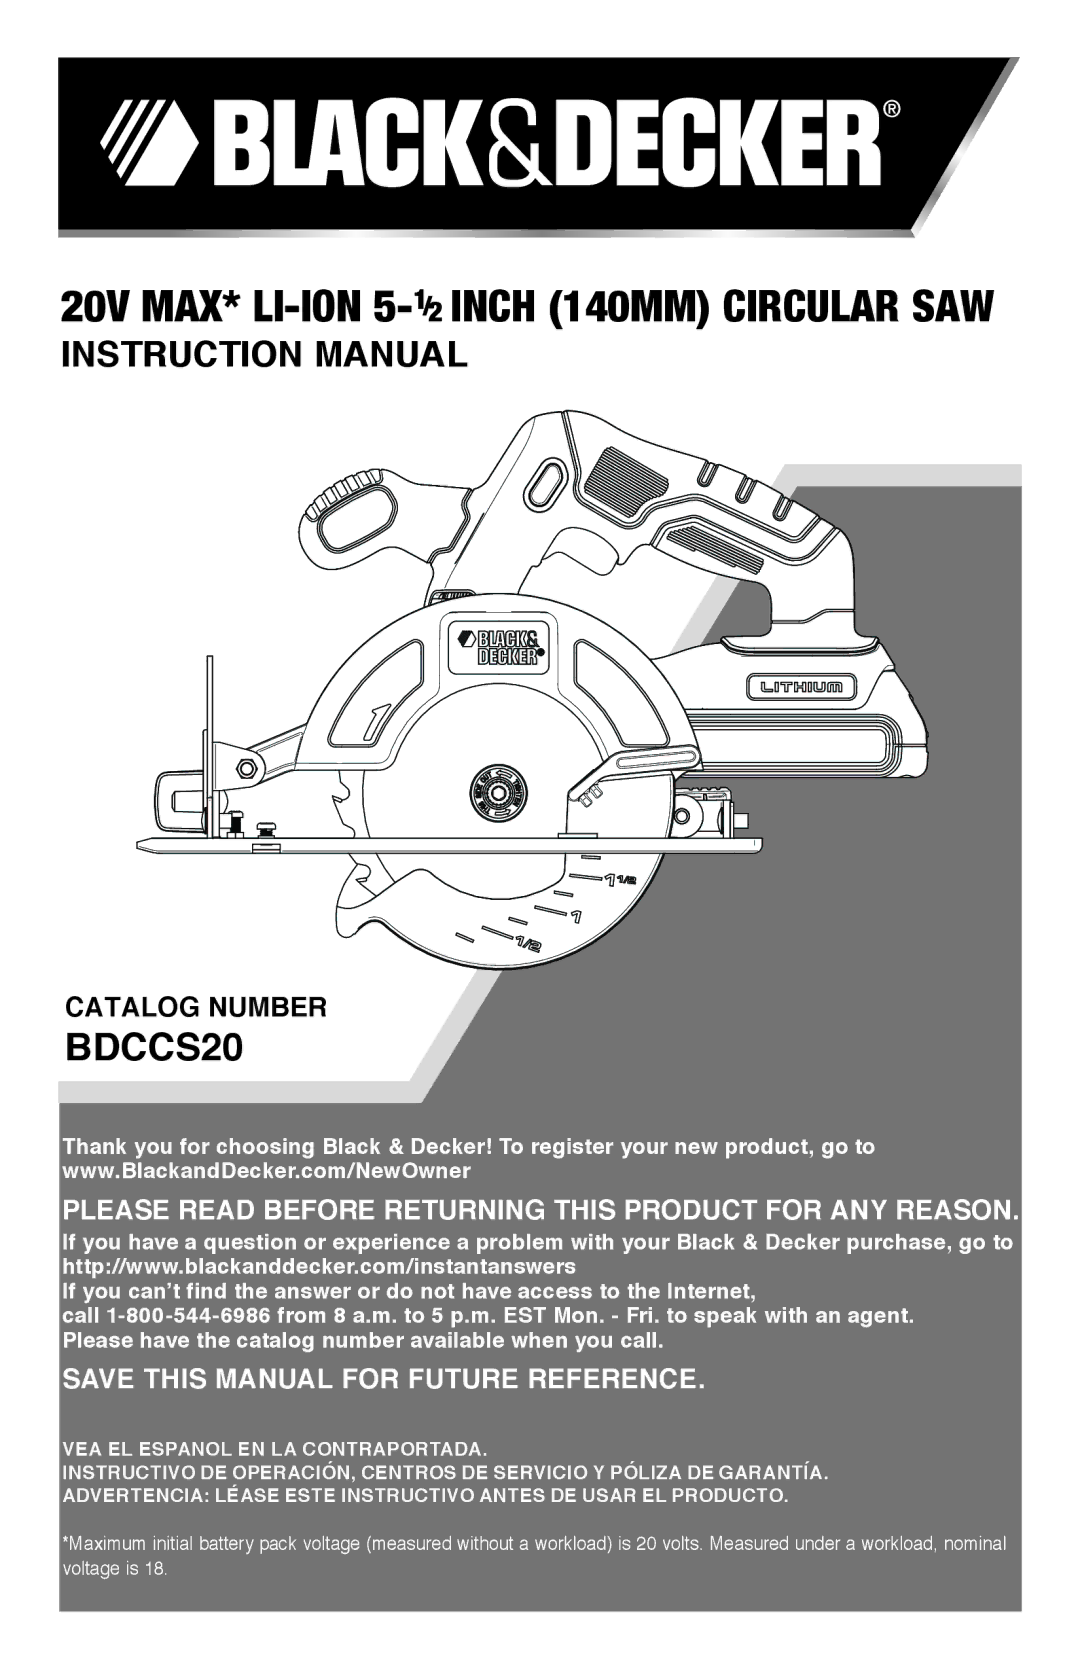 Black & Decker BDCD2204KIT instruction manual 20V MAx* Li-ion 5-1/2inch 140mm Circular saw, Catalog Number 